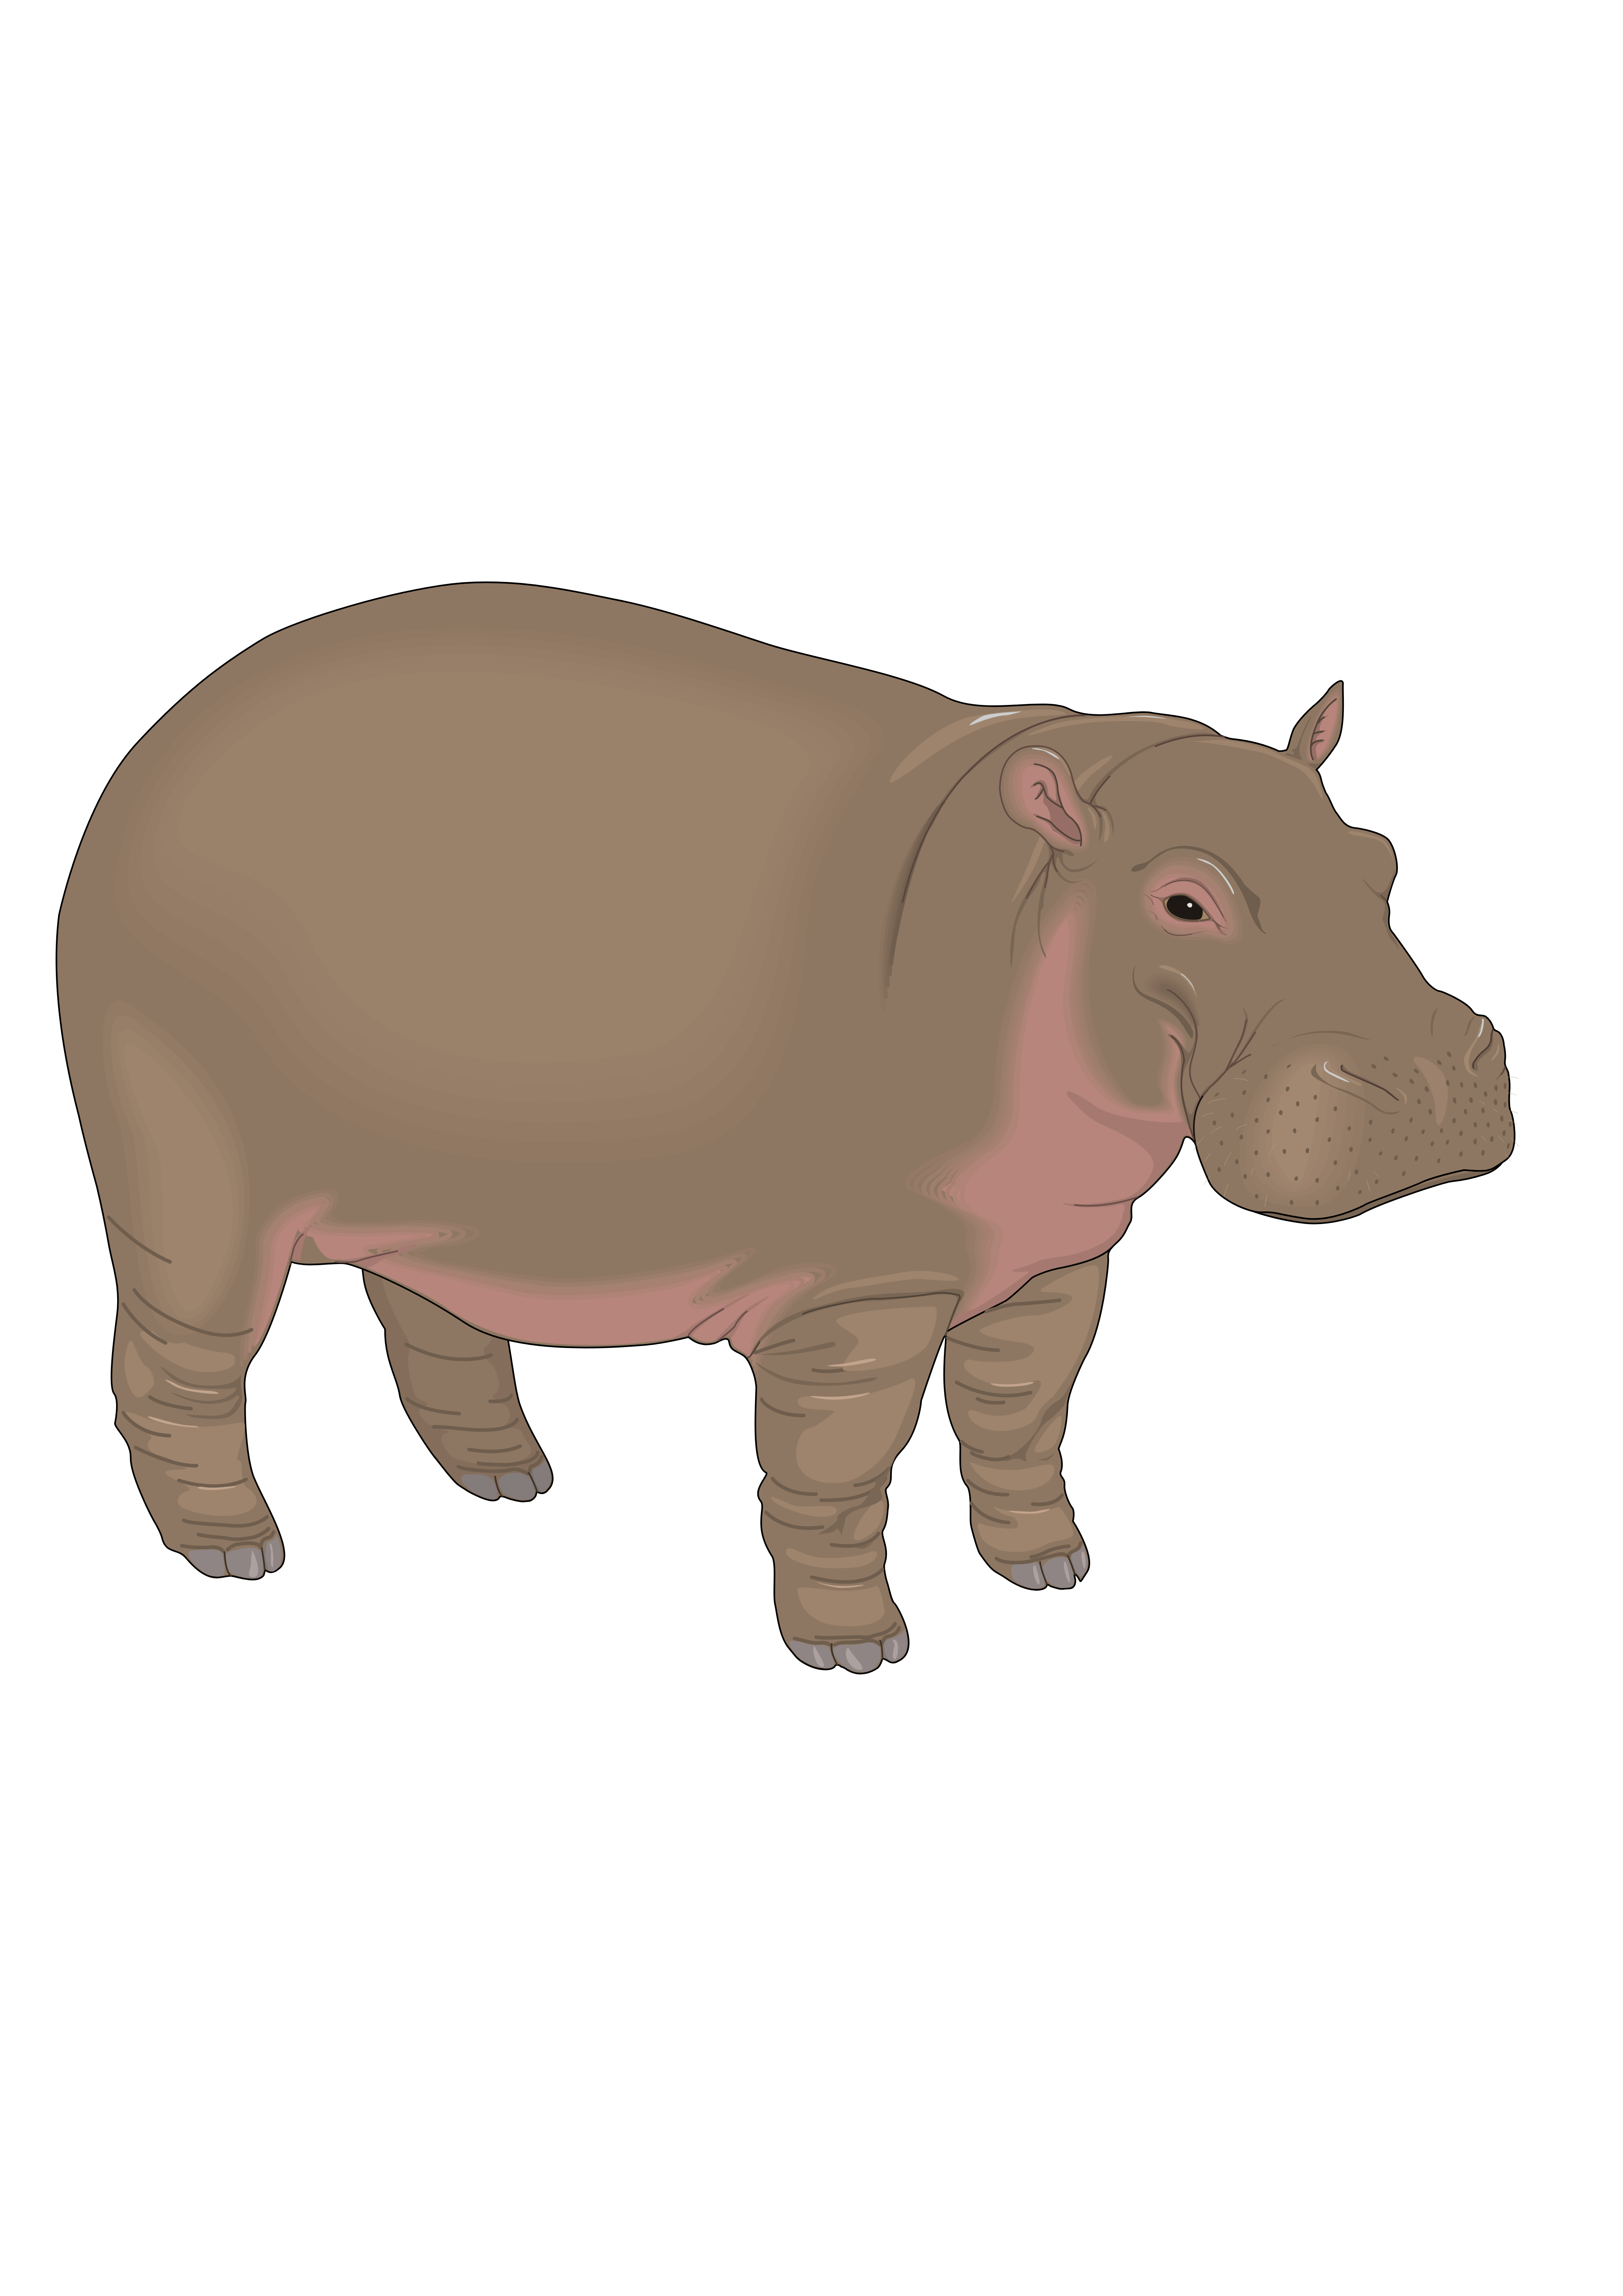 Un hippopotame. Par Clker-Free-Vector-, Canva